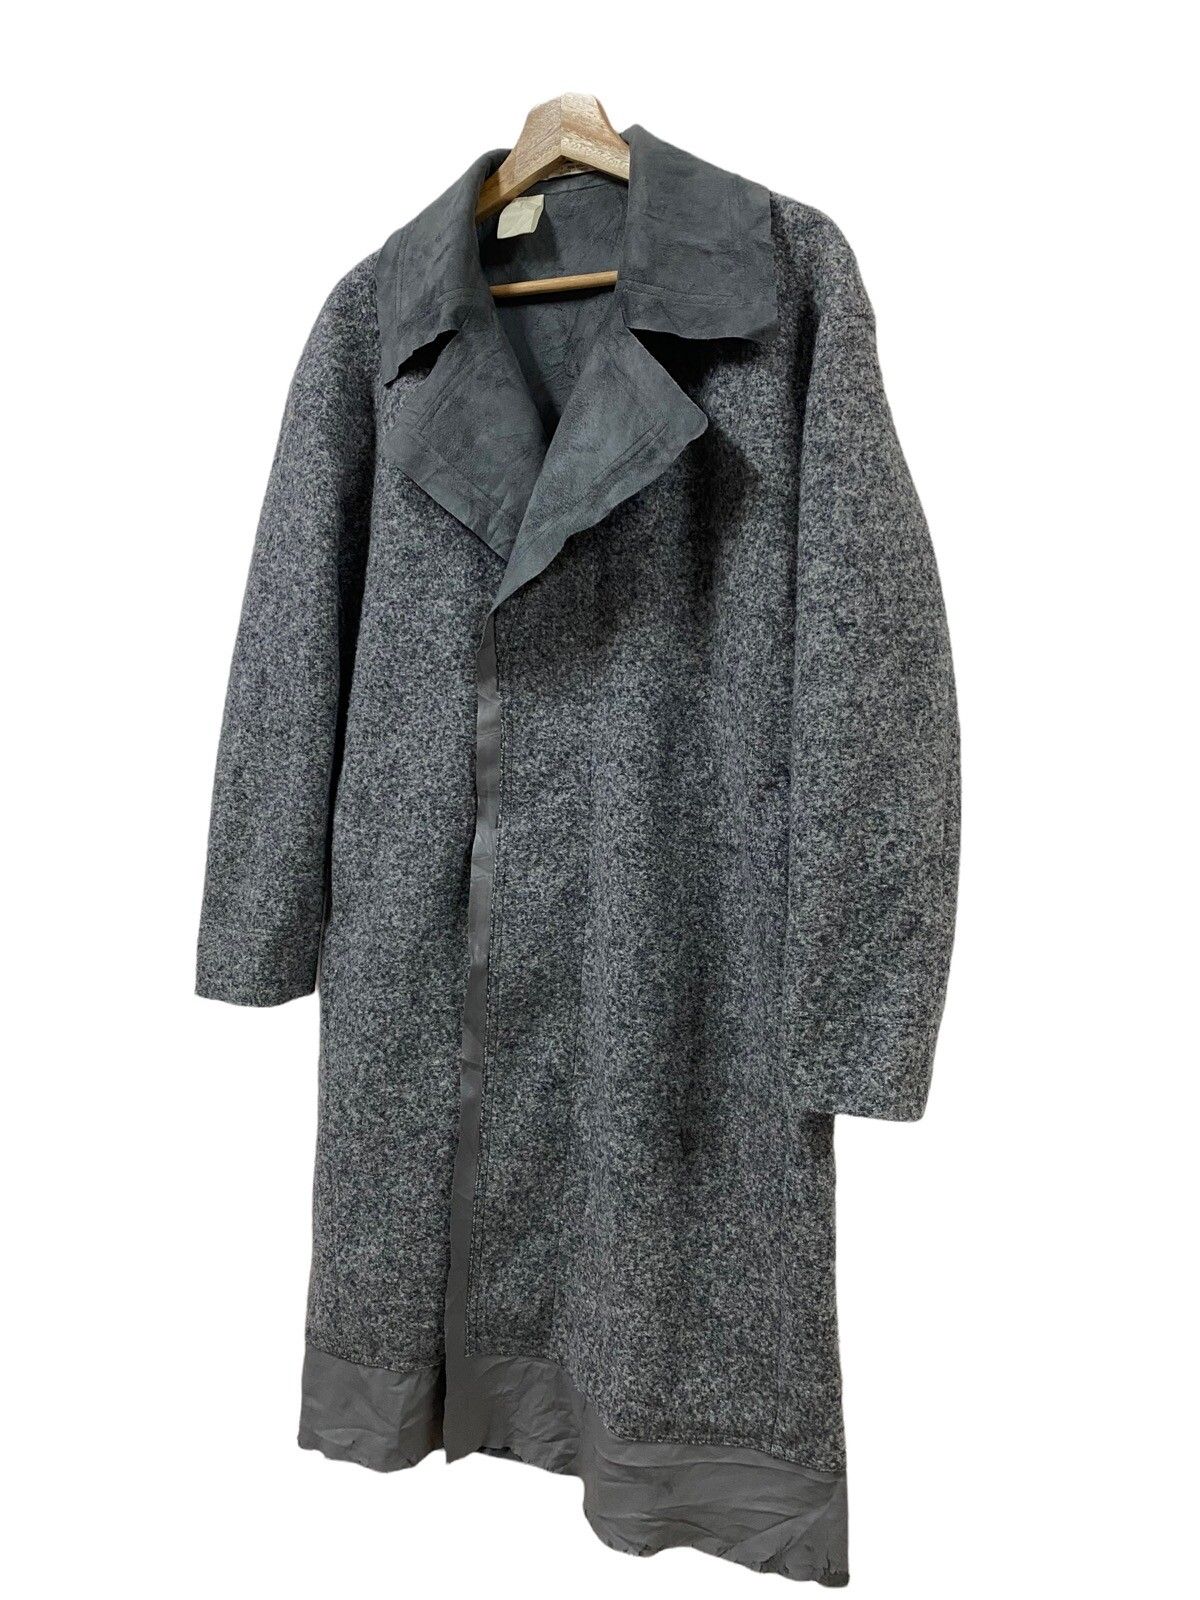 A/W17 N.Hollywood Wool Long Jacket Style 91606 - 7